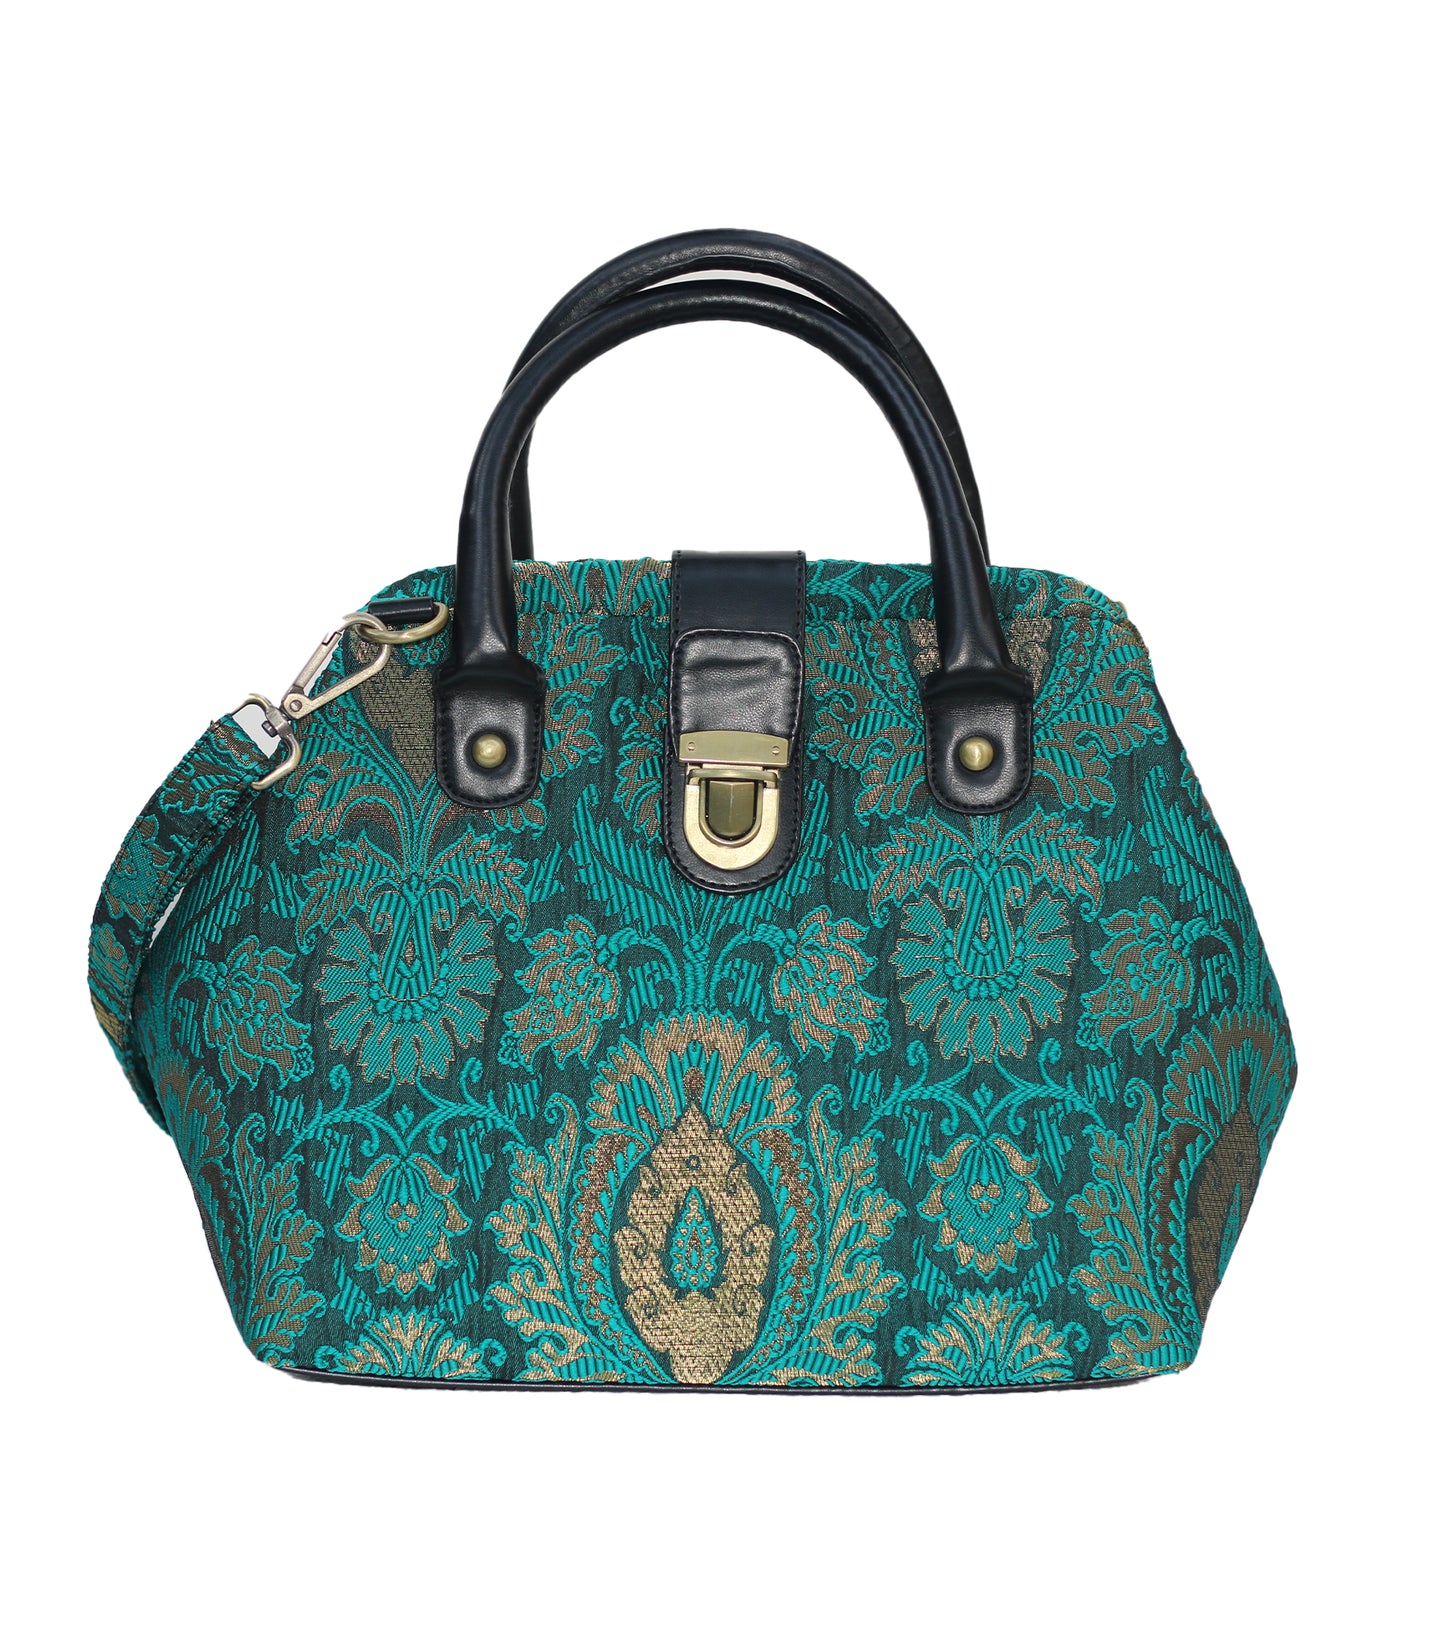 Mary Poppins Green Gold Jacquard  Handbags